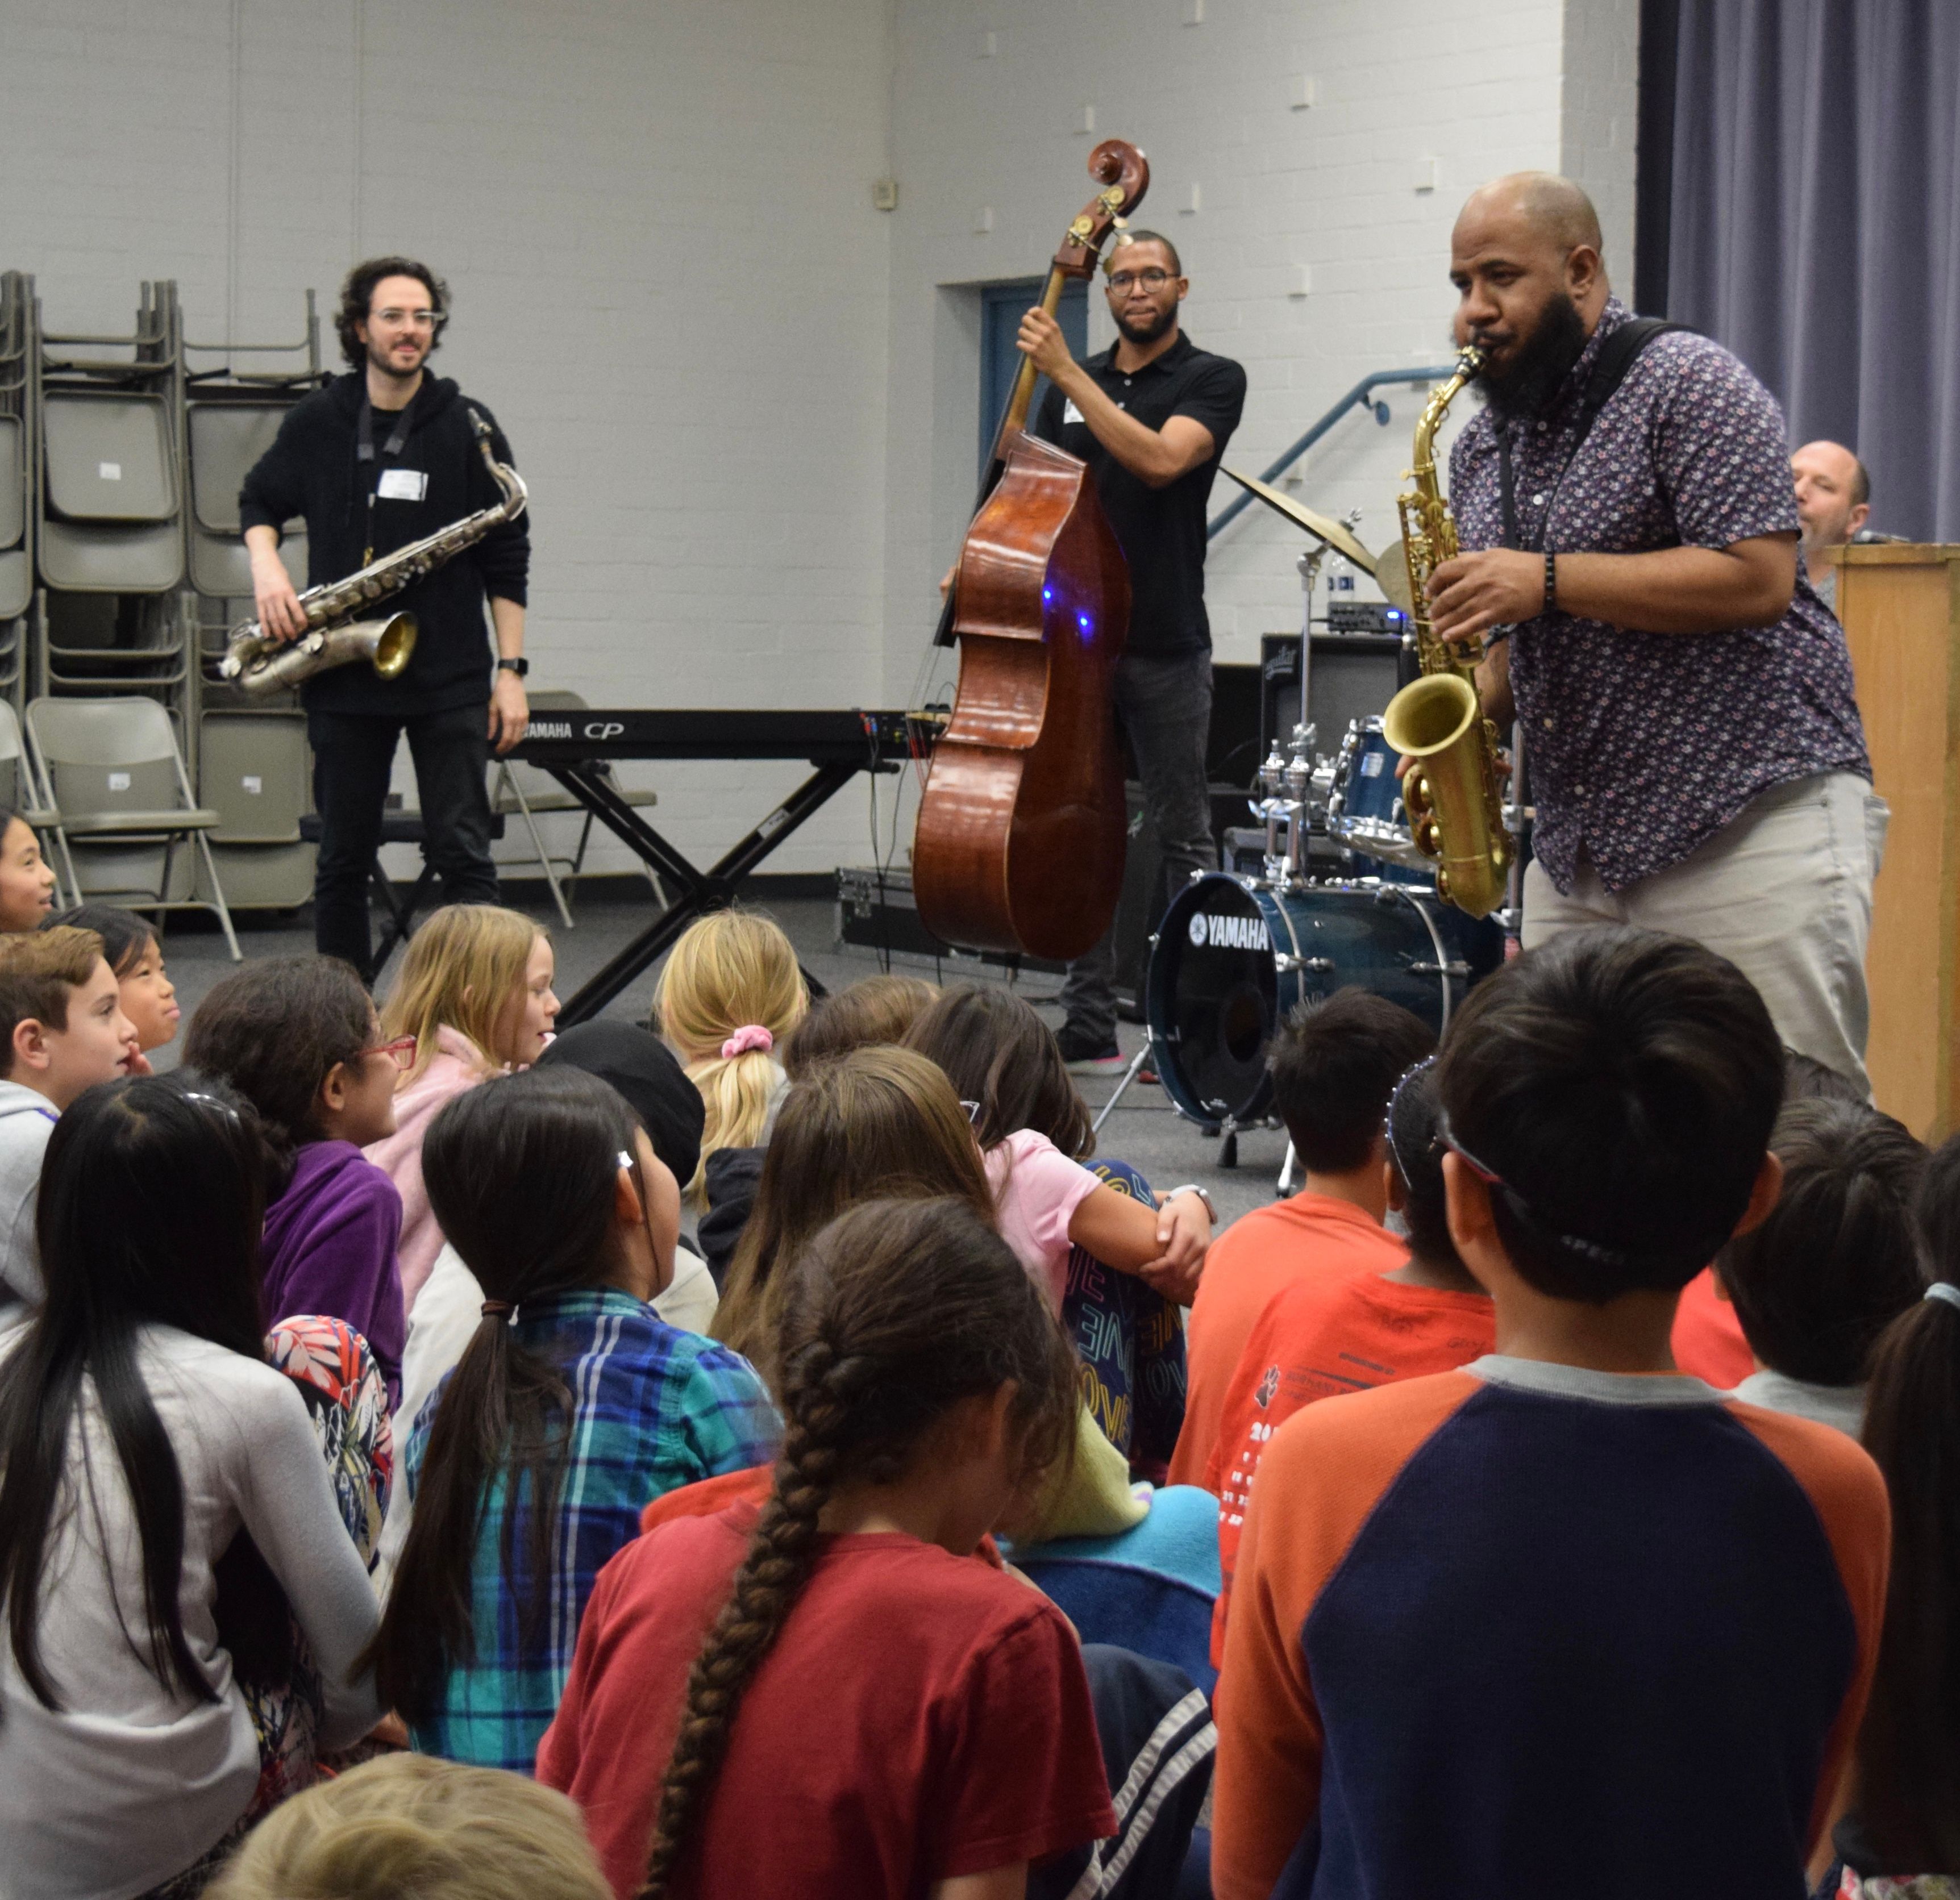 1100 Local Elementary School Children get their First Taste of a Live Jazz Performance